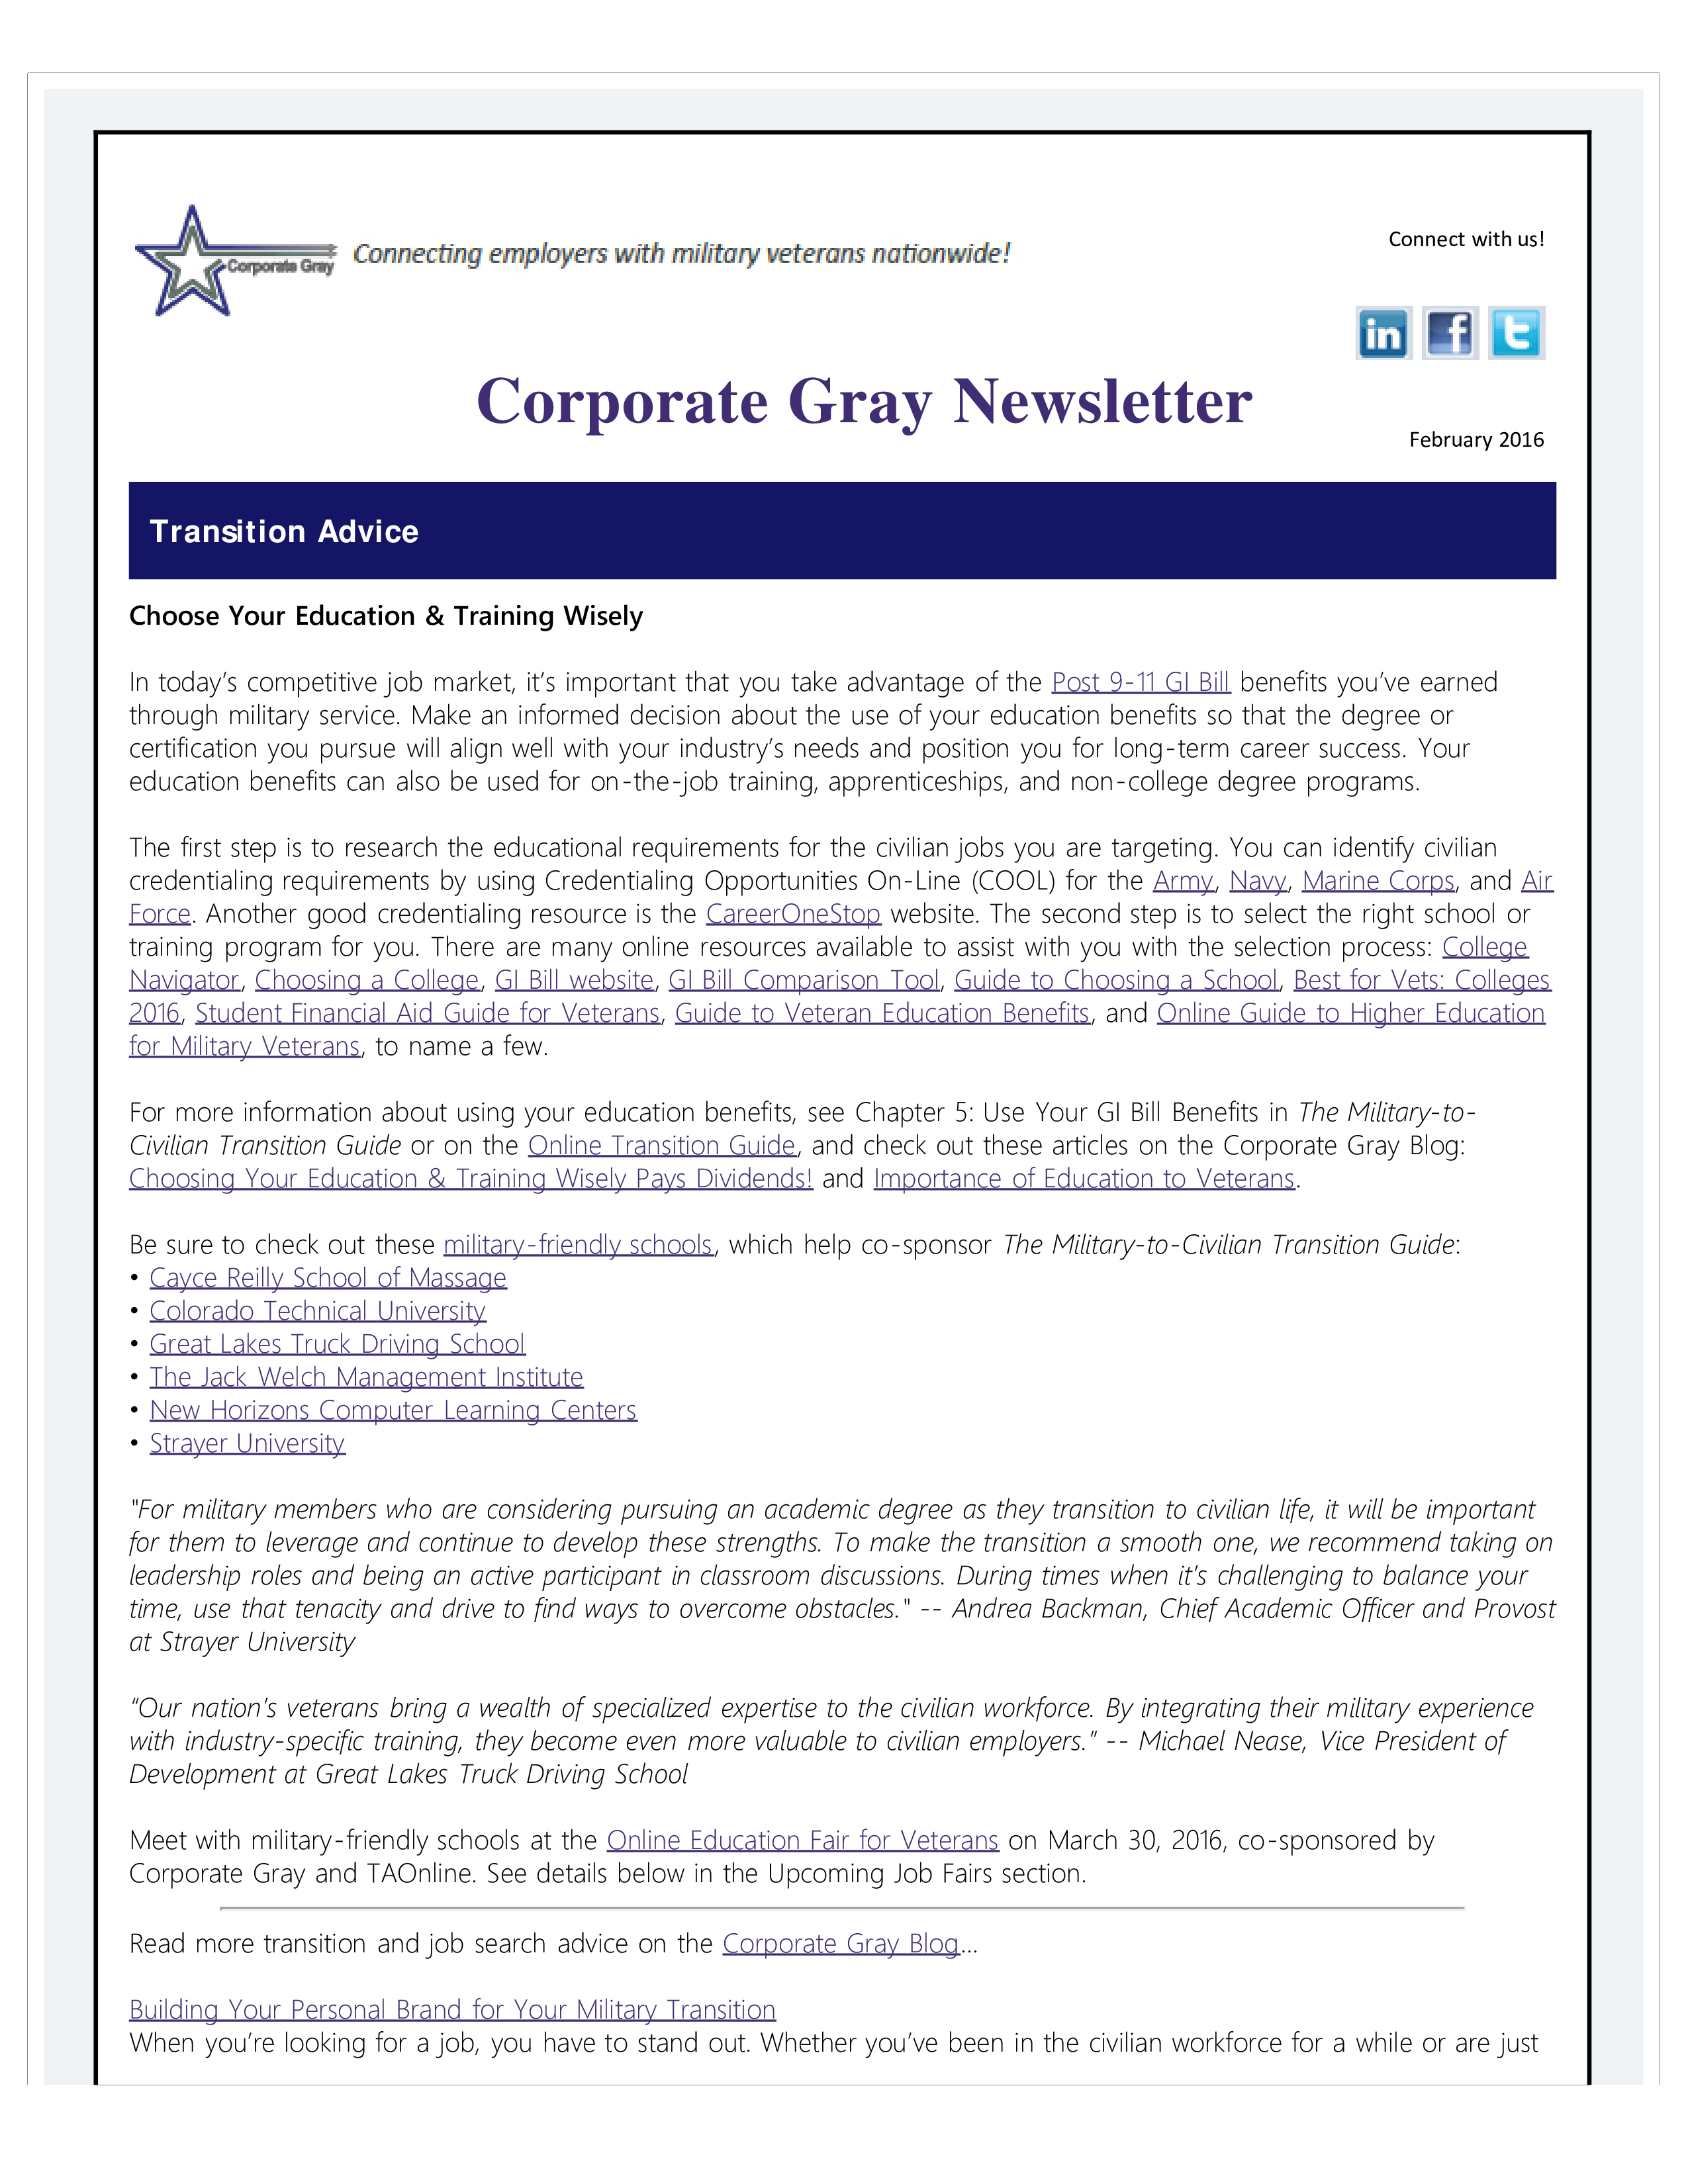 Corporate Gray Newsletter main image